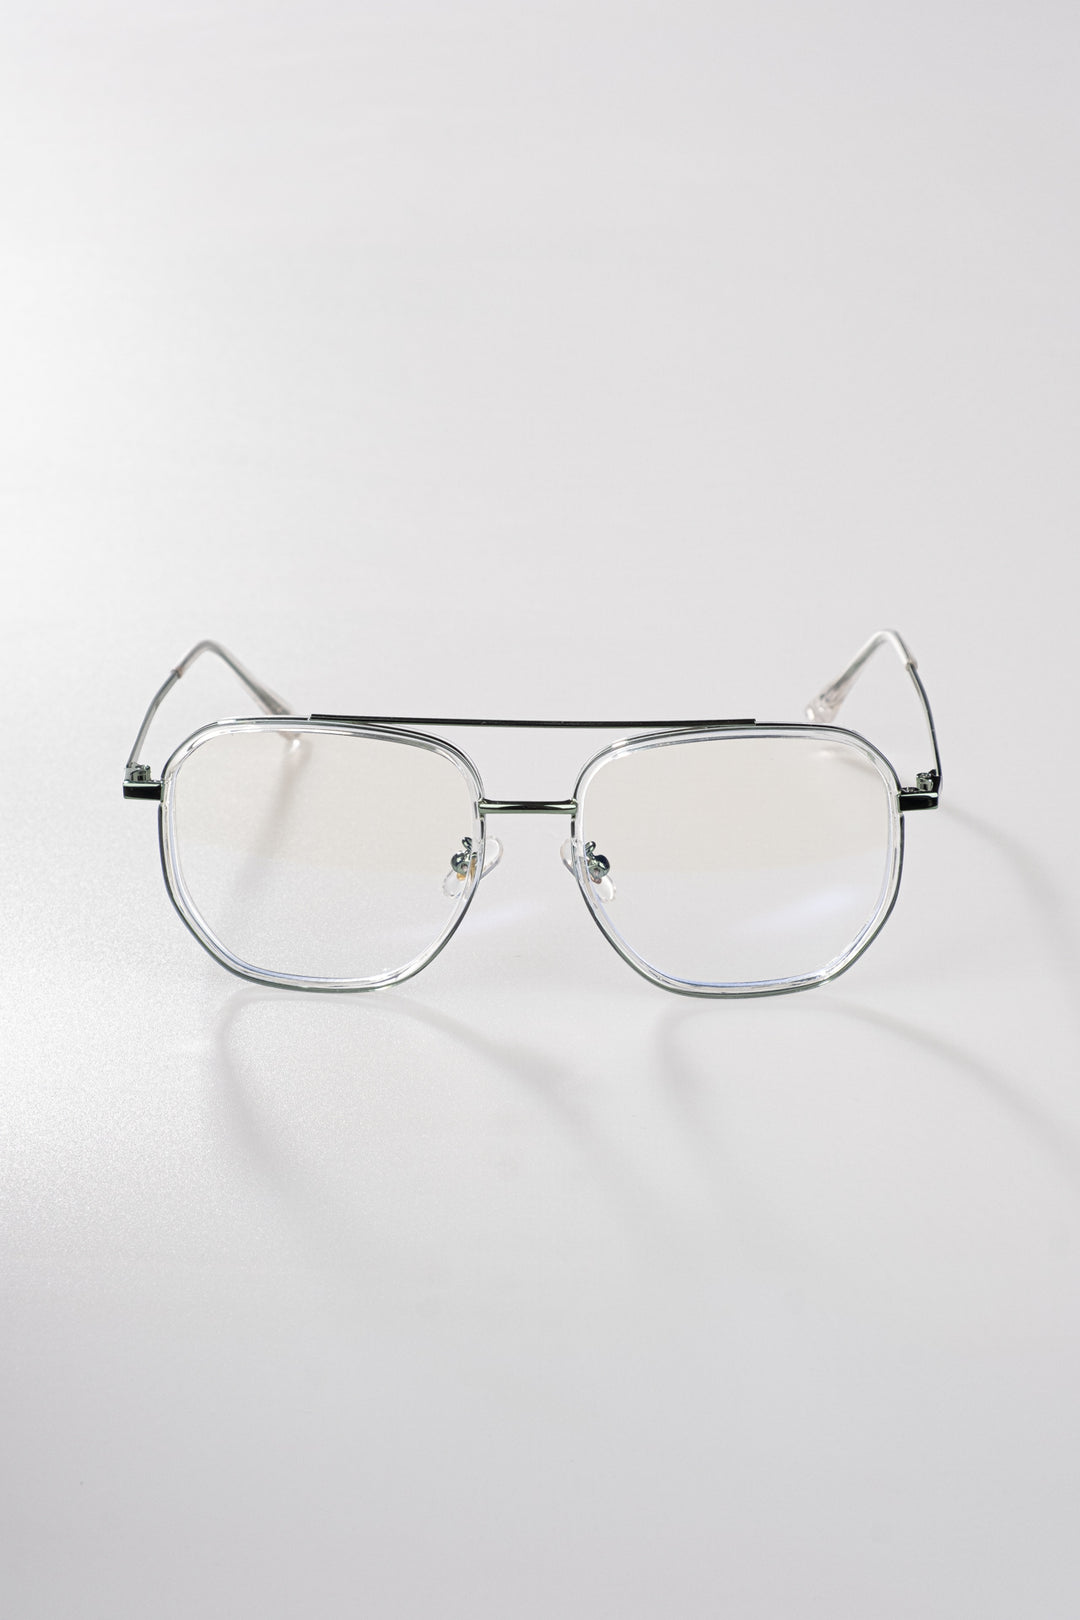 Dıandora Blue Light Protection Glasses